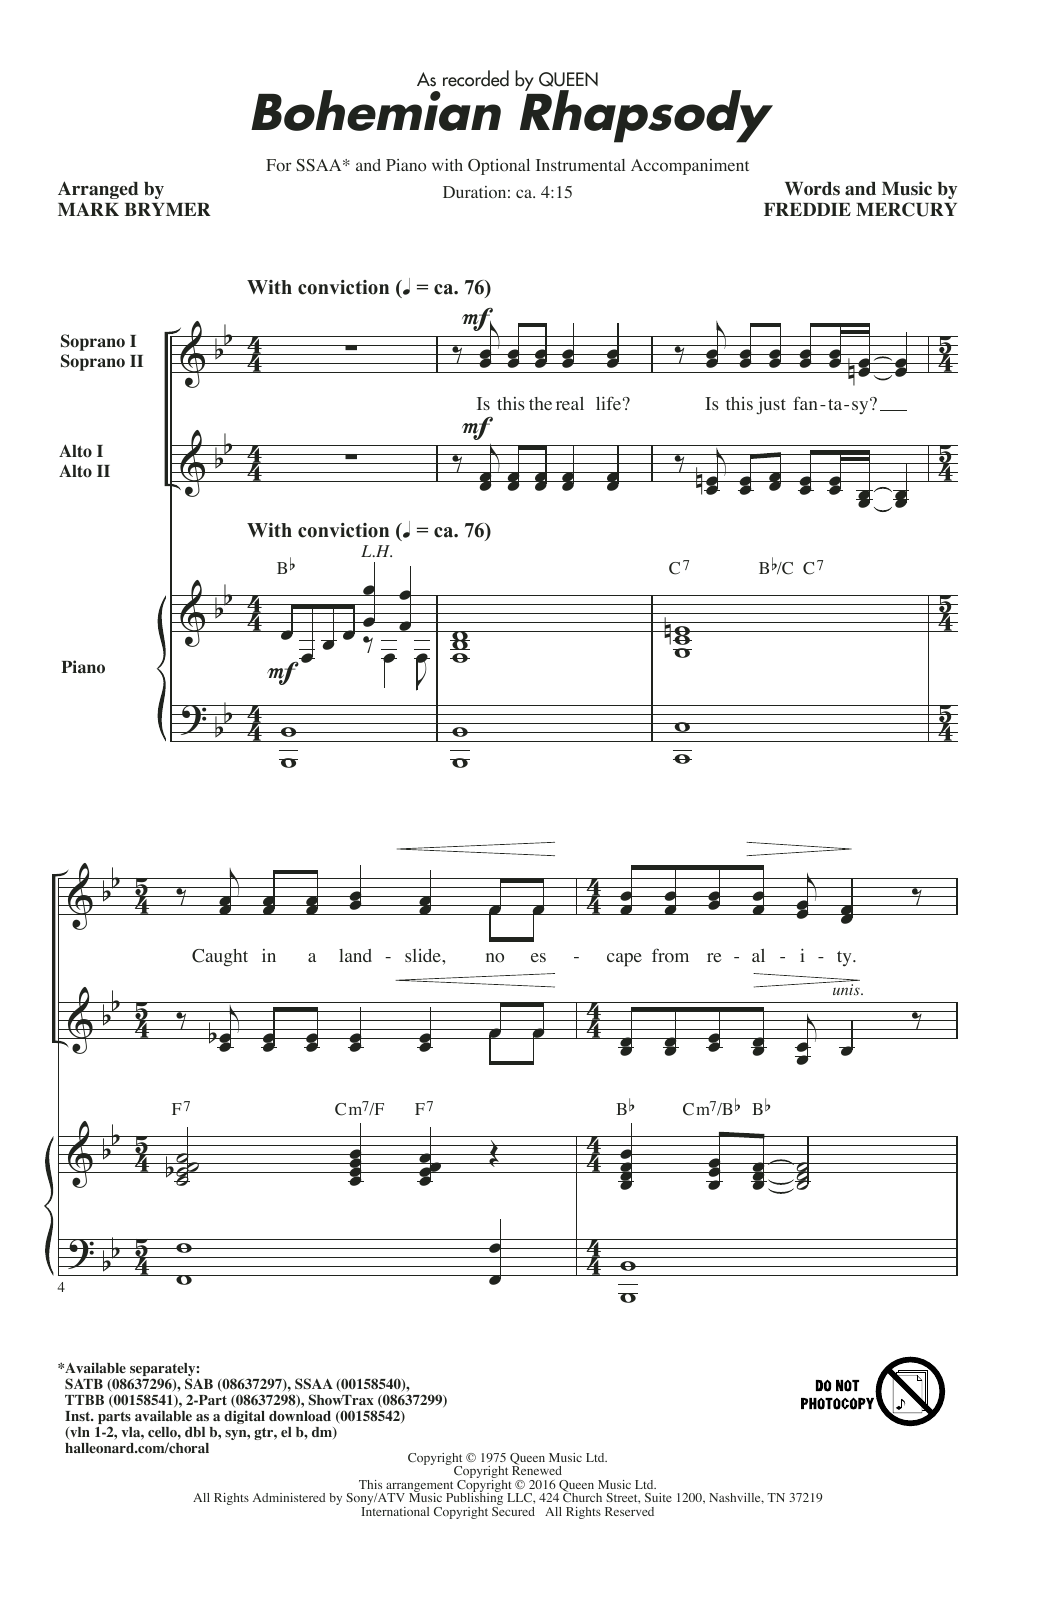 Queen Bohemian Rhapsody (arr. Mark Brymer) Sheet Music Notes & Chords for SATB Choir - Download or Print PDF